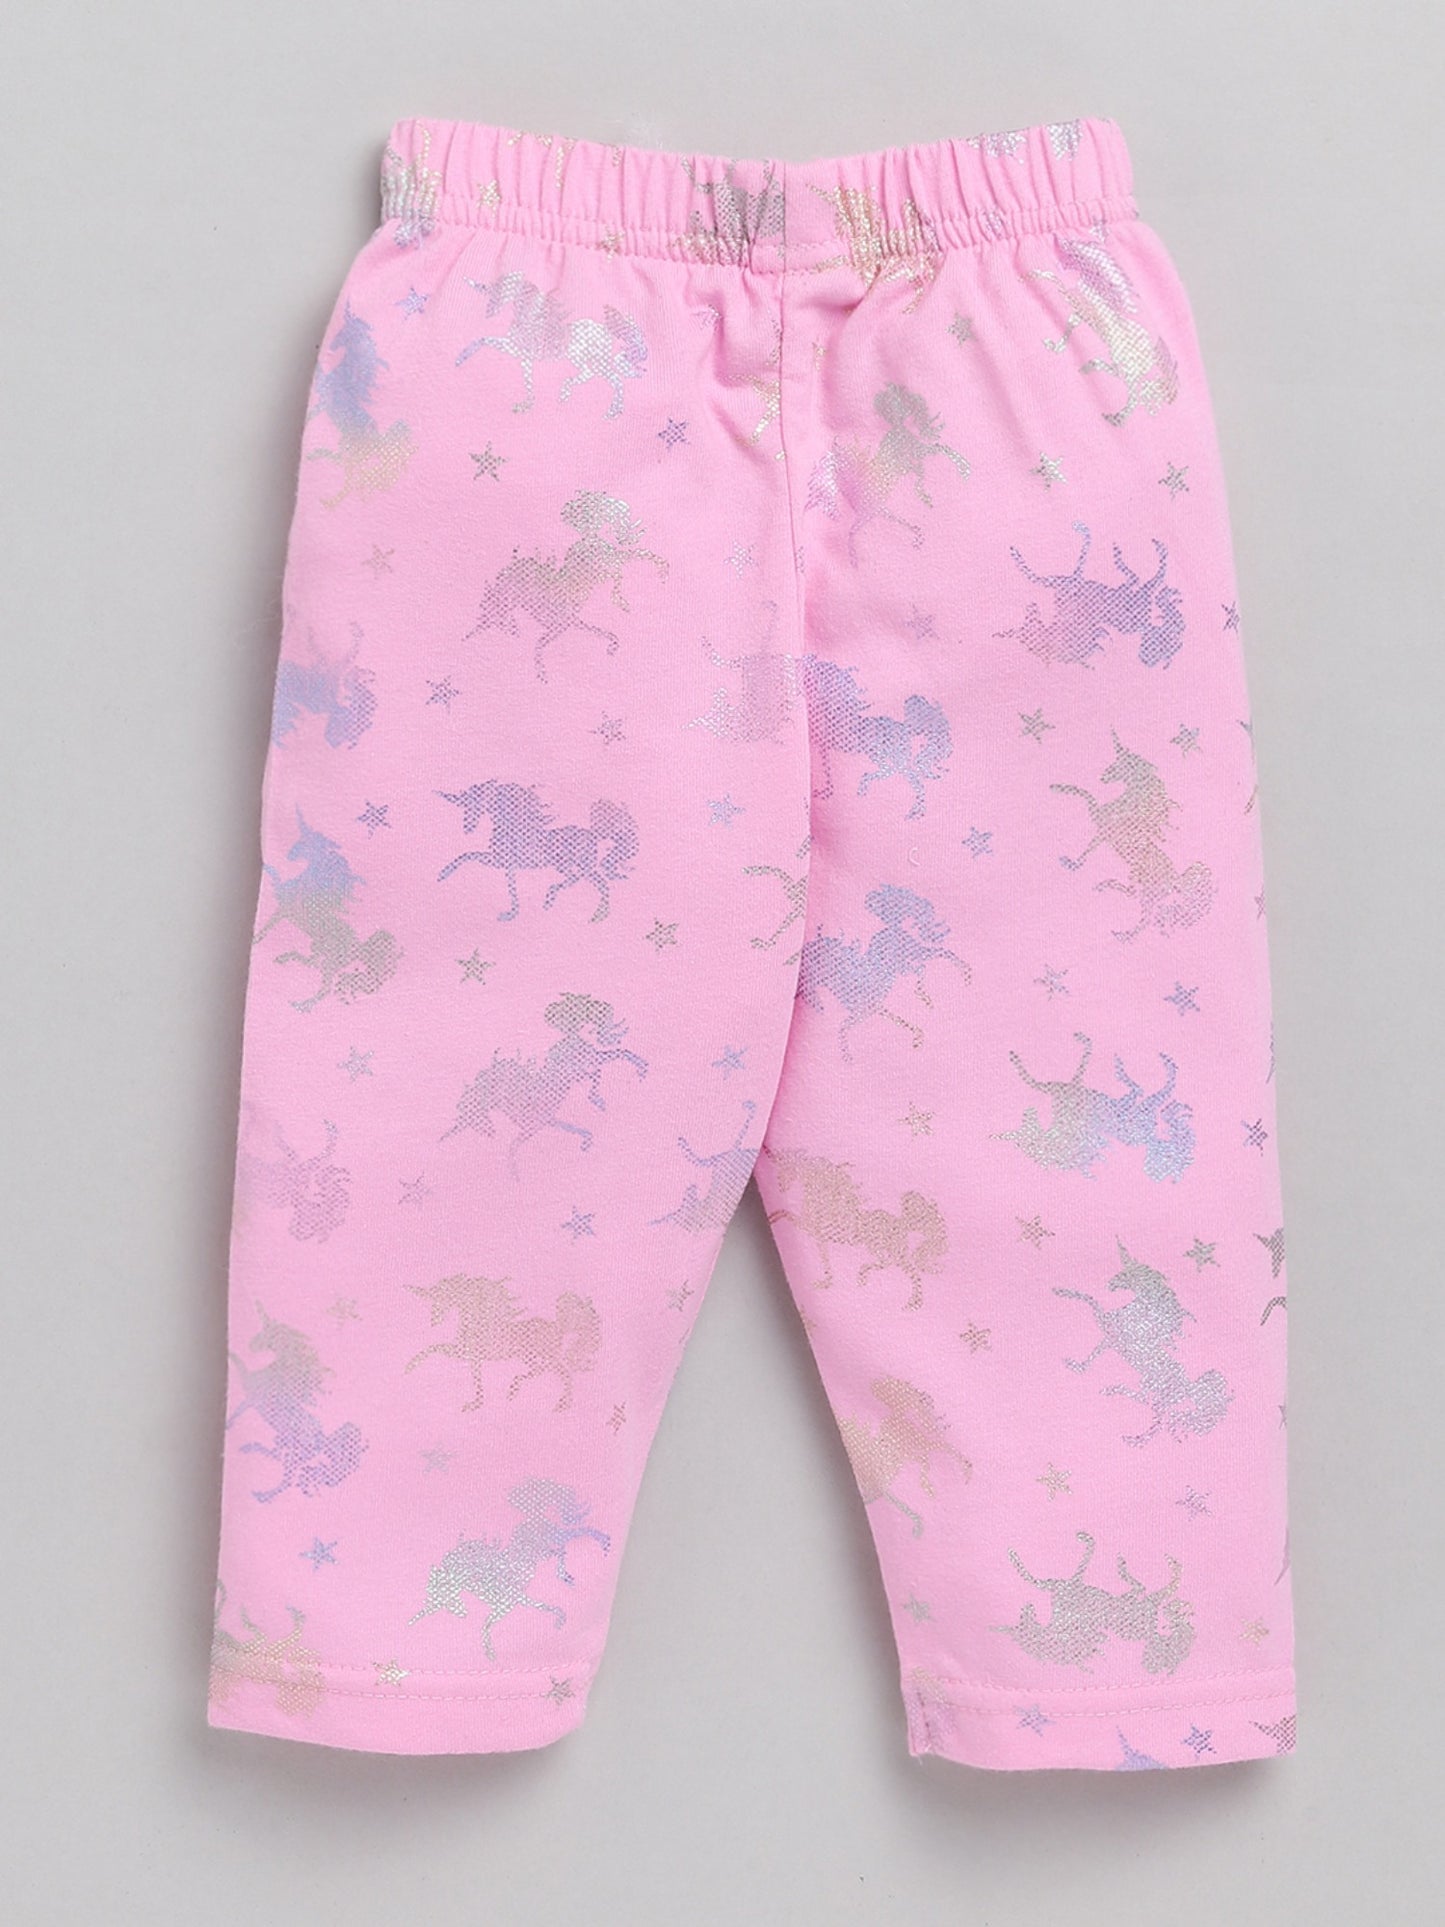 Unicorn Pink Cotton Full Sleeve Nightwear Set